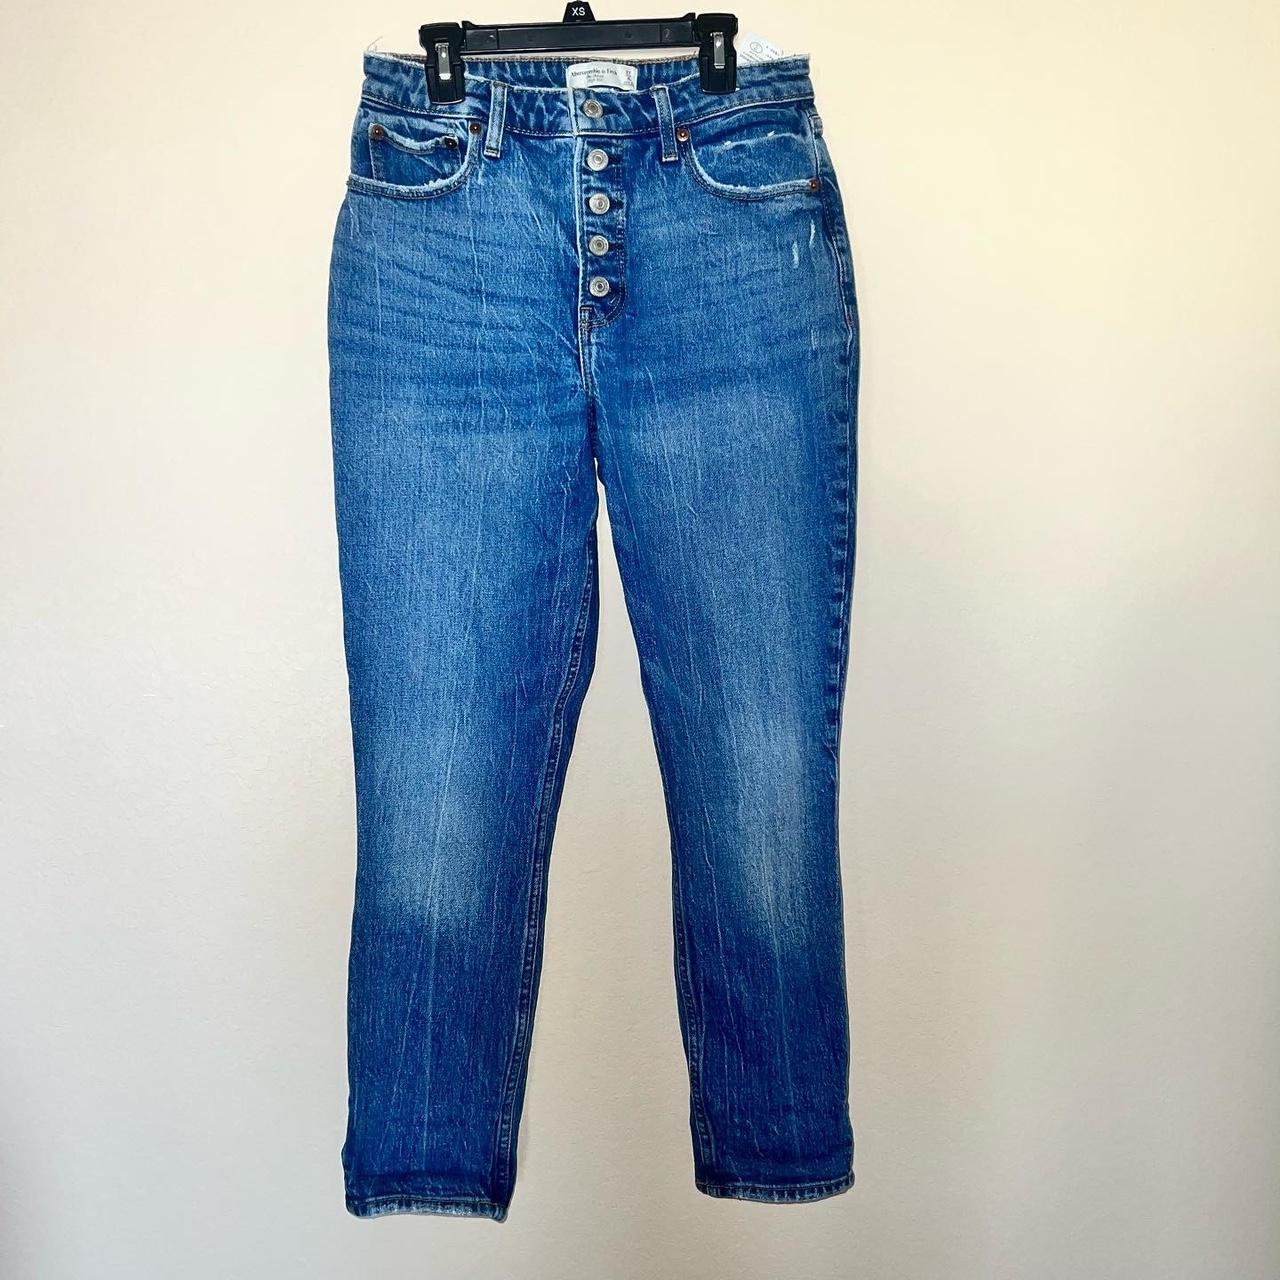 Abercrombie Curve Love Jeans Size 4/27 HR Skinny - Depop